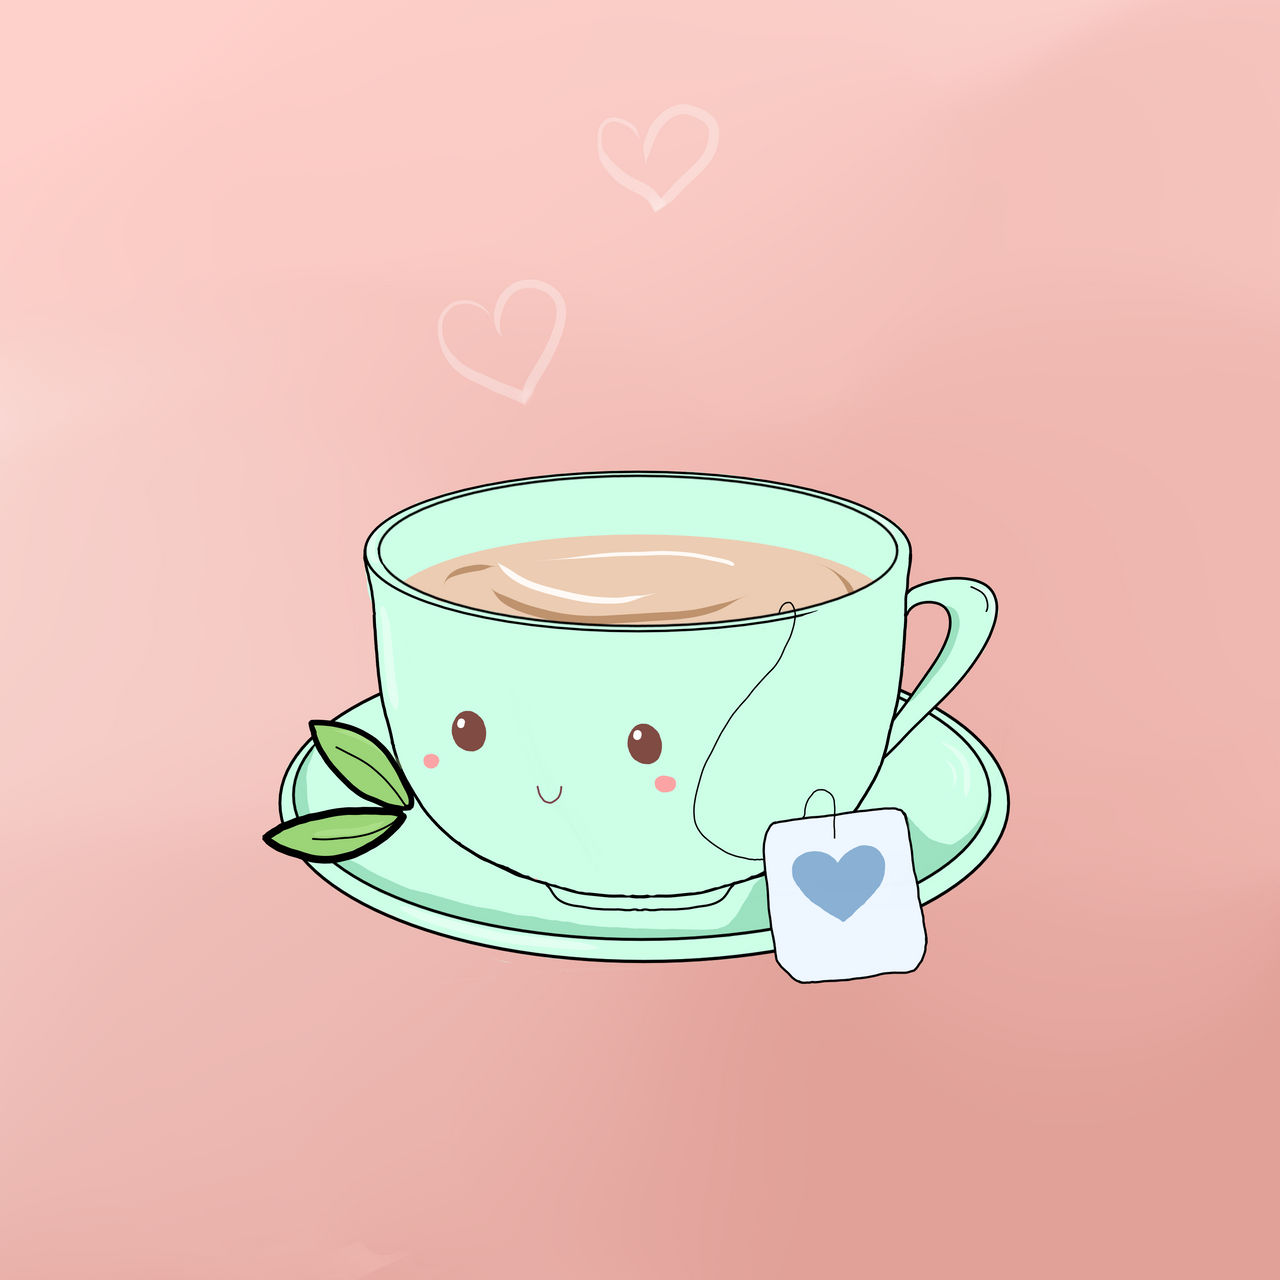 Tea cup by OphiliaArt on DeviantArt